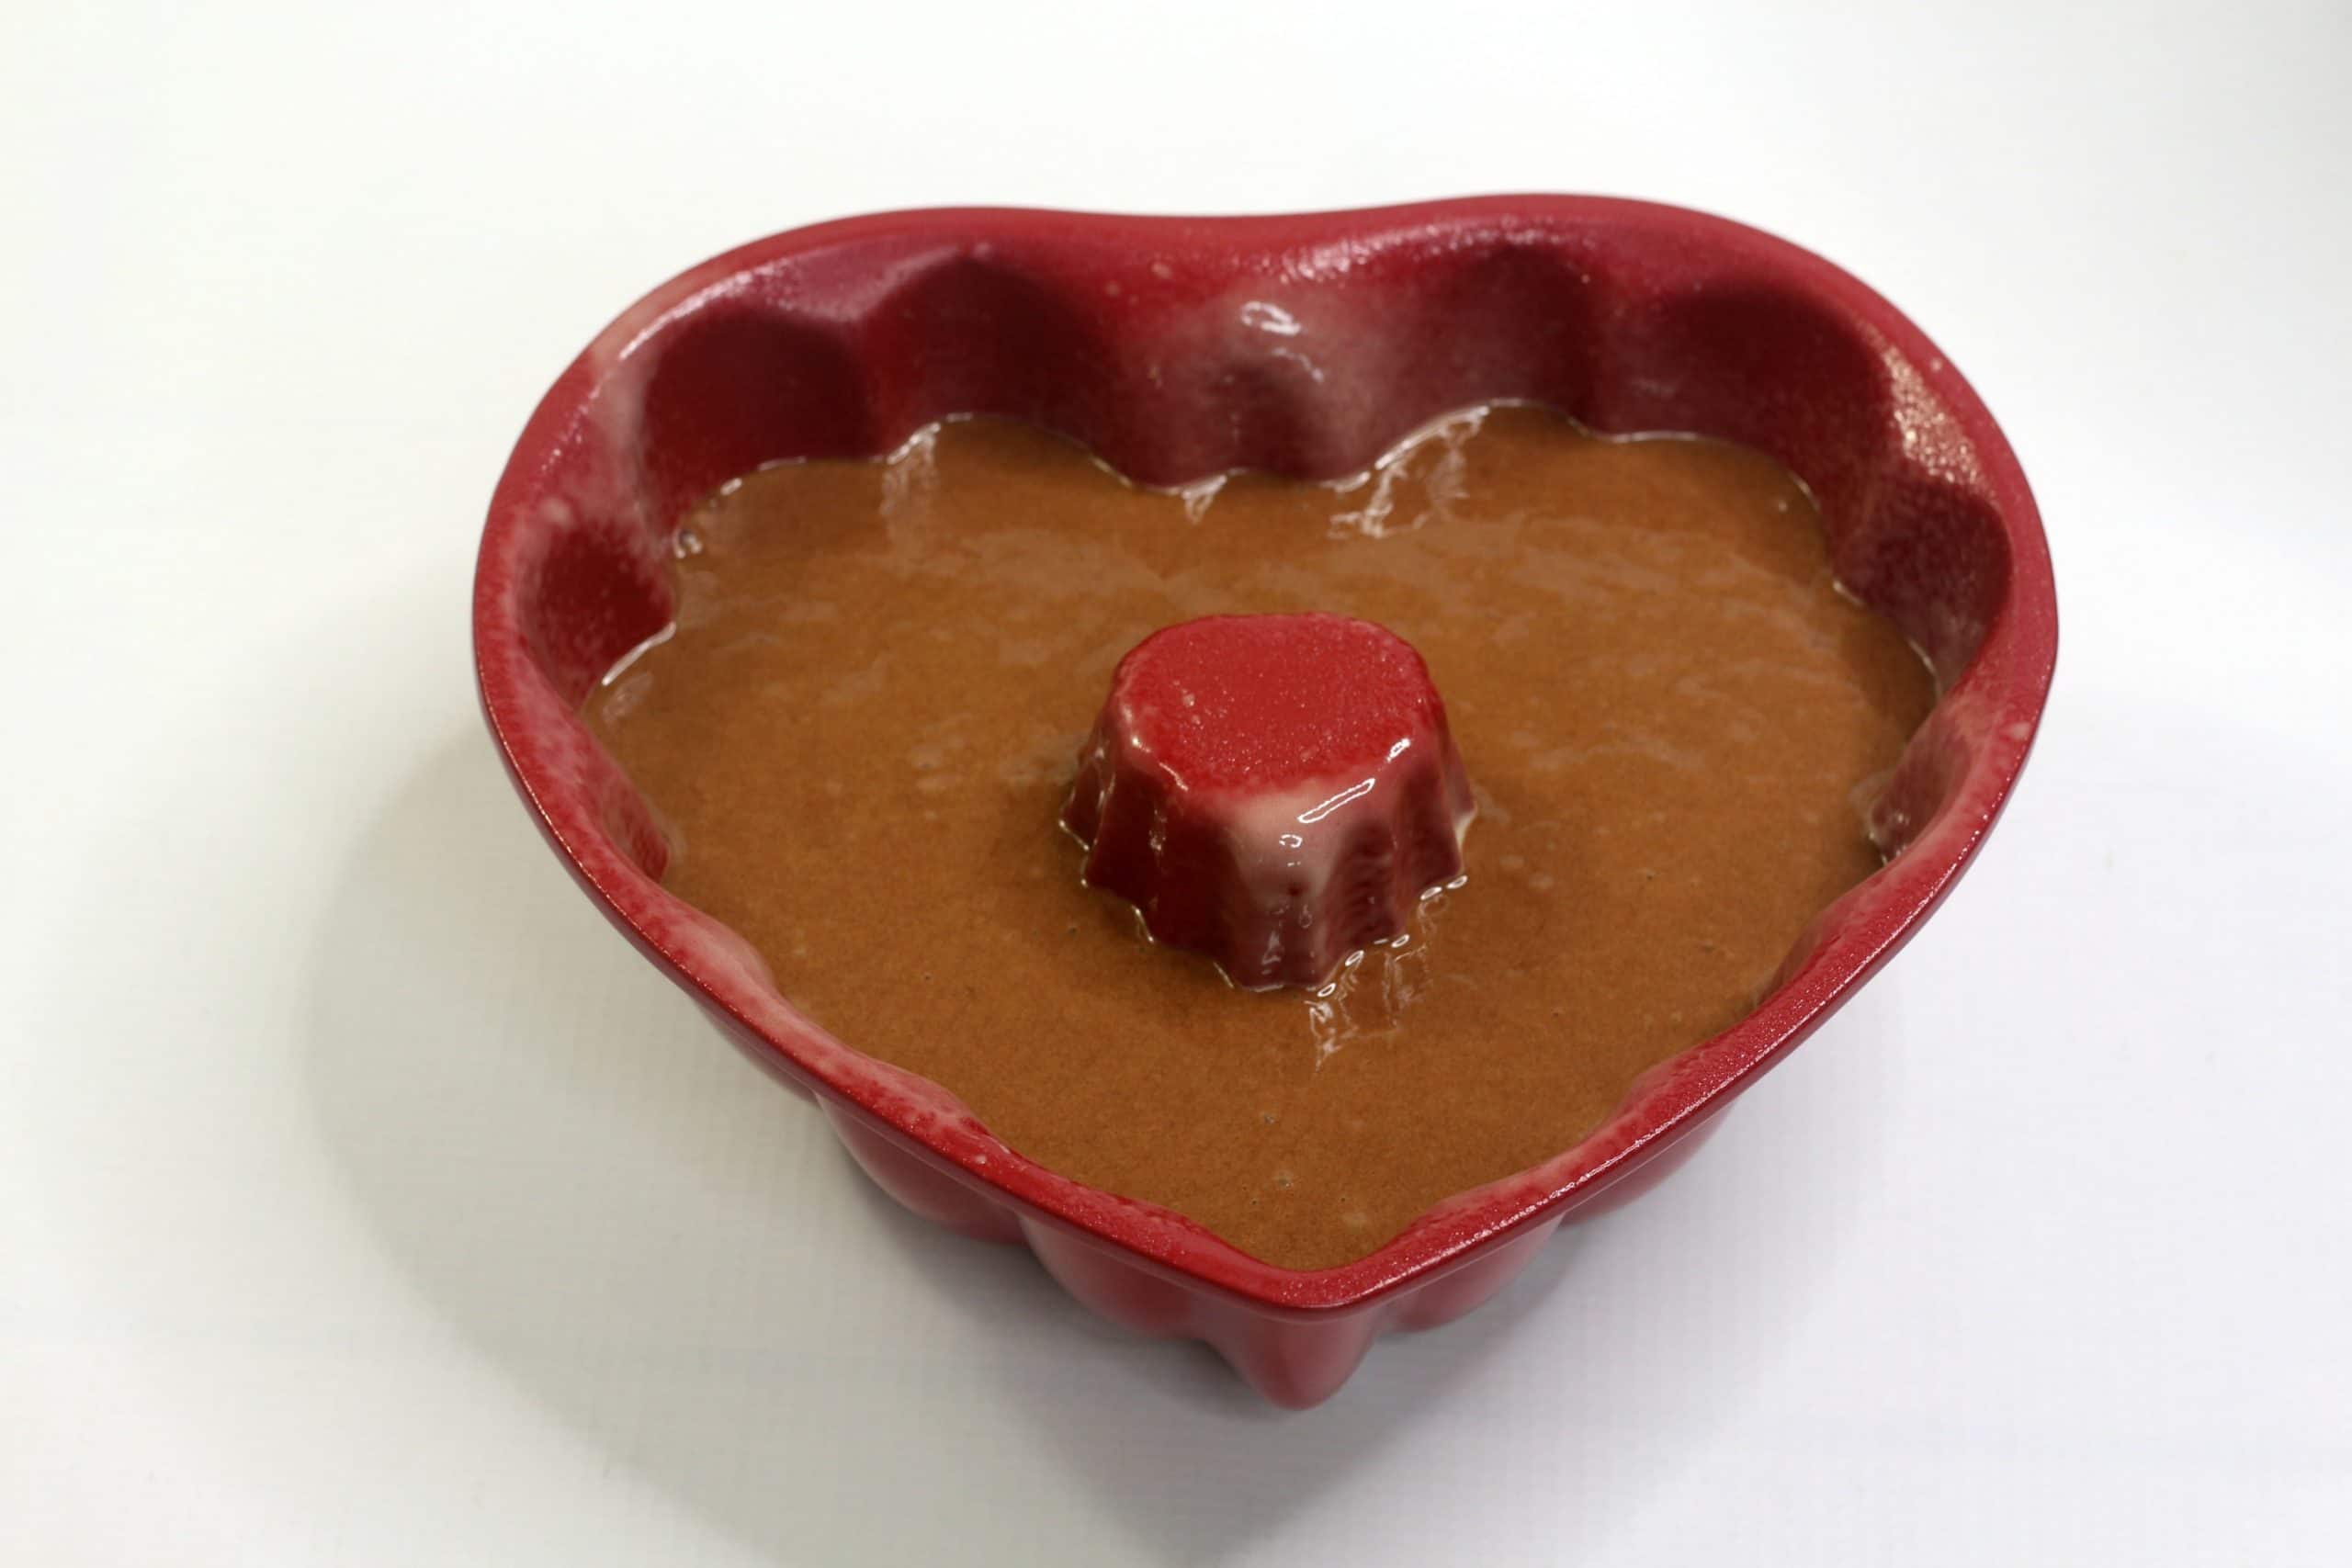 Easy Instant Pot Valentine's Day Bundt Cake - Love These Recipes